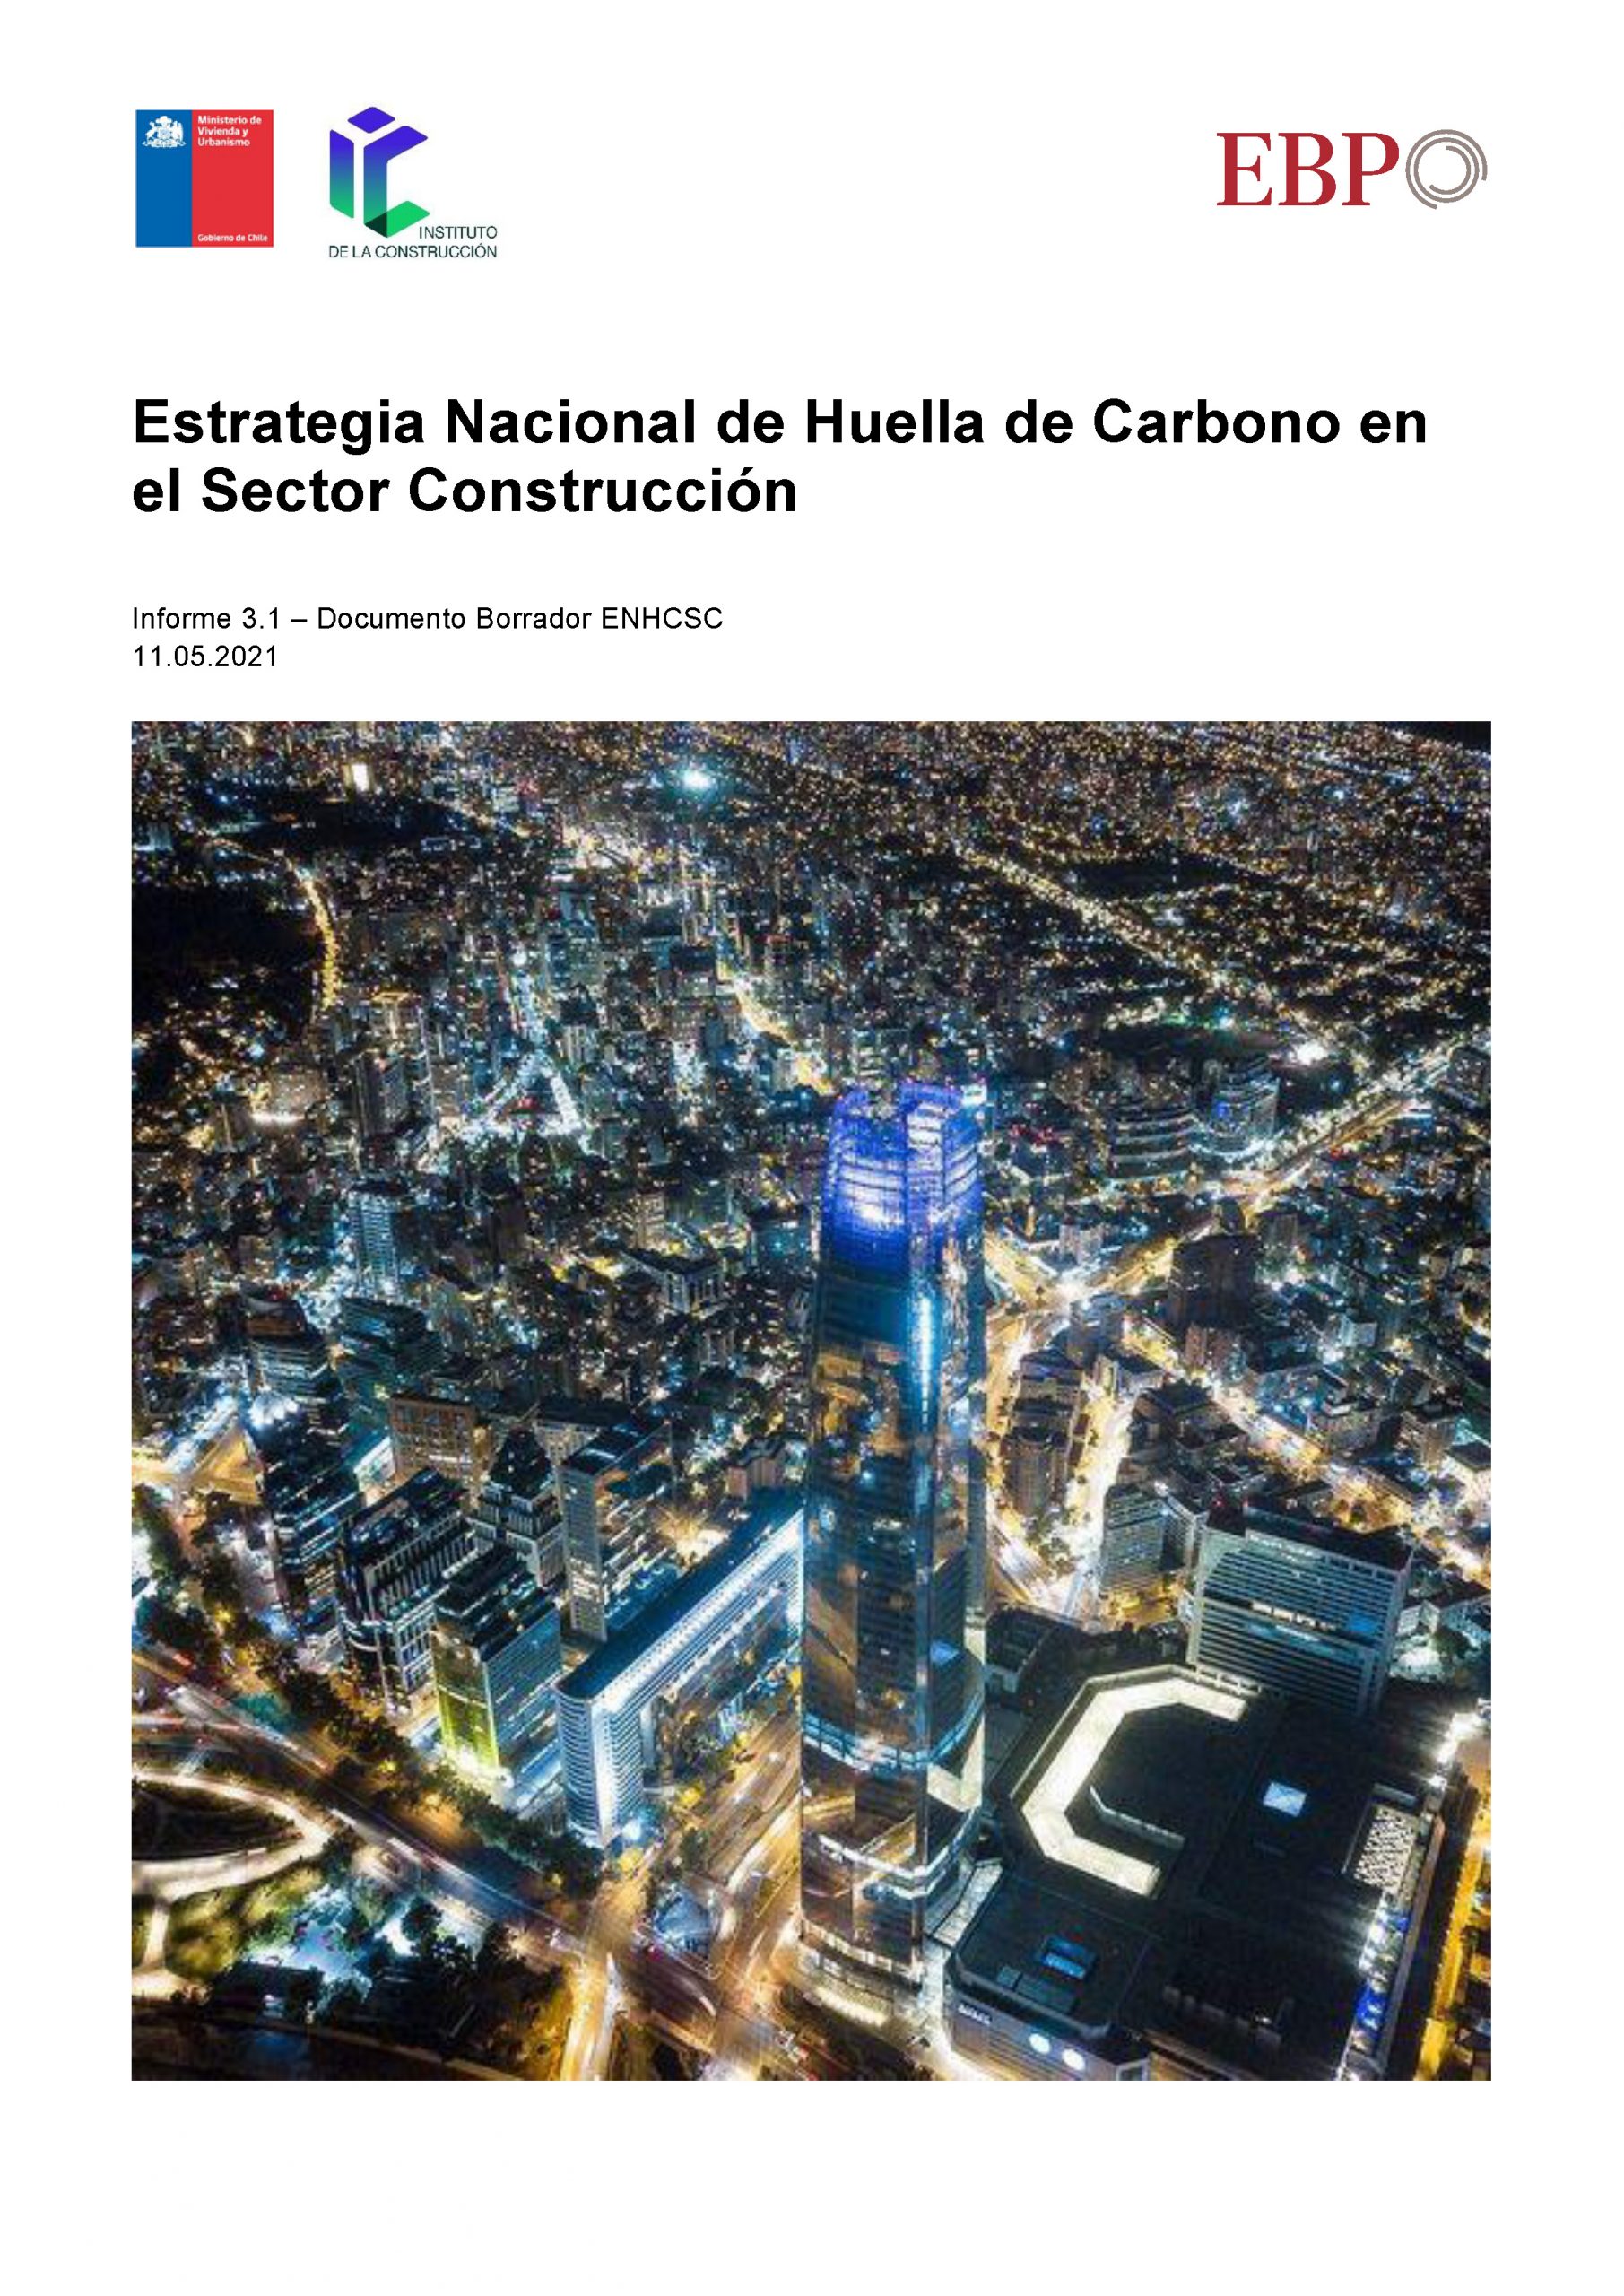  Se inicia consulta pública de la Estrategia Nacional de Huella de Carbono